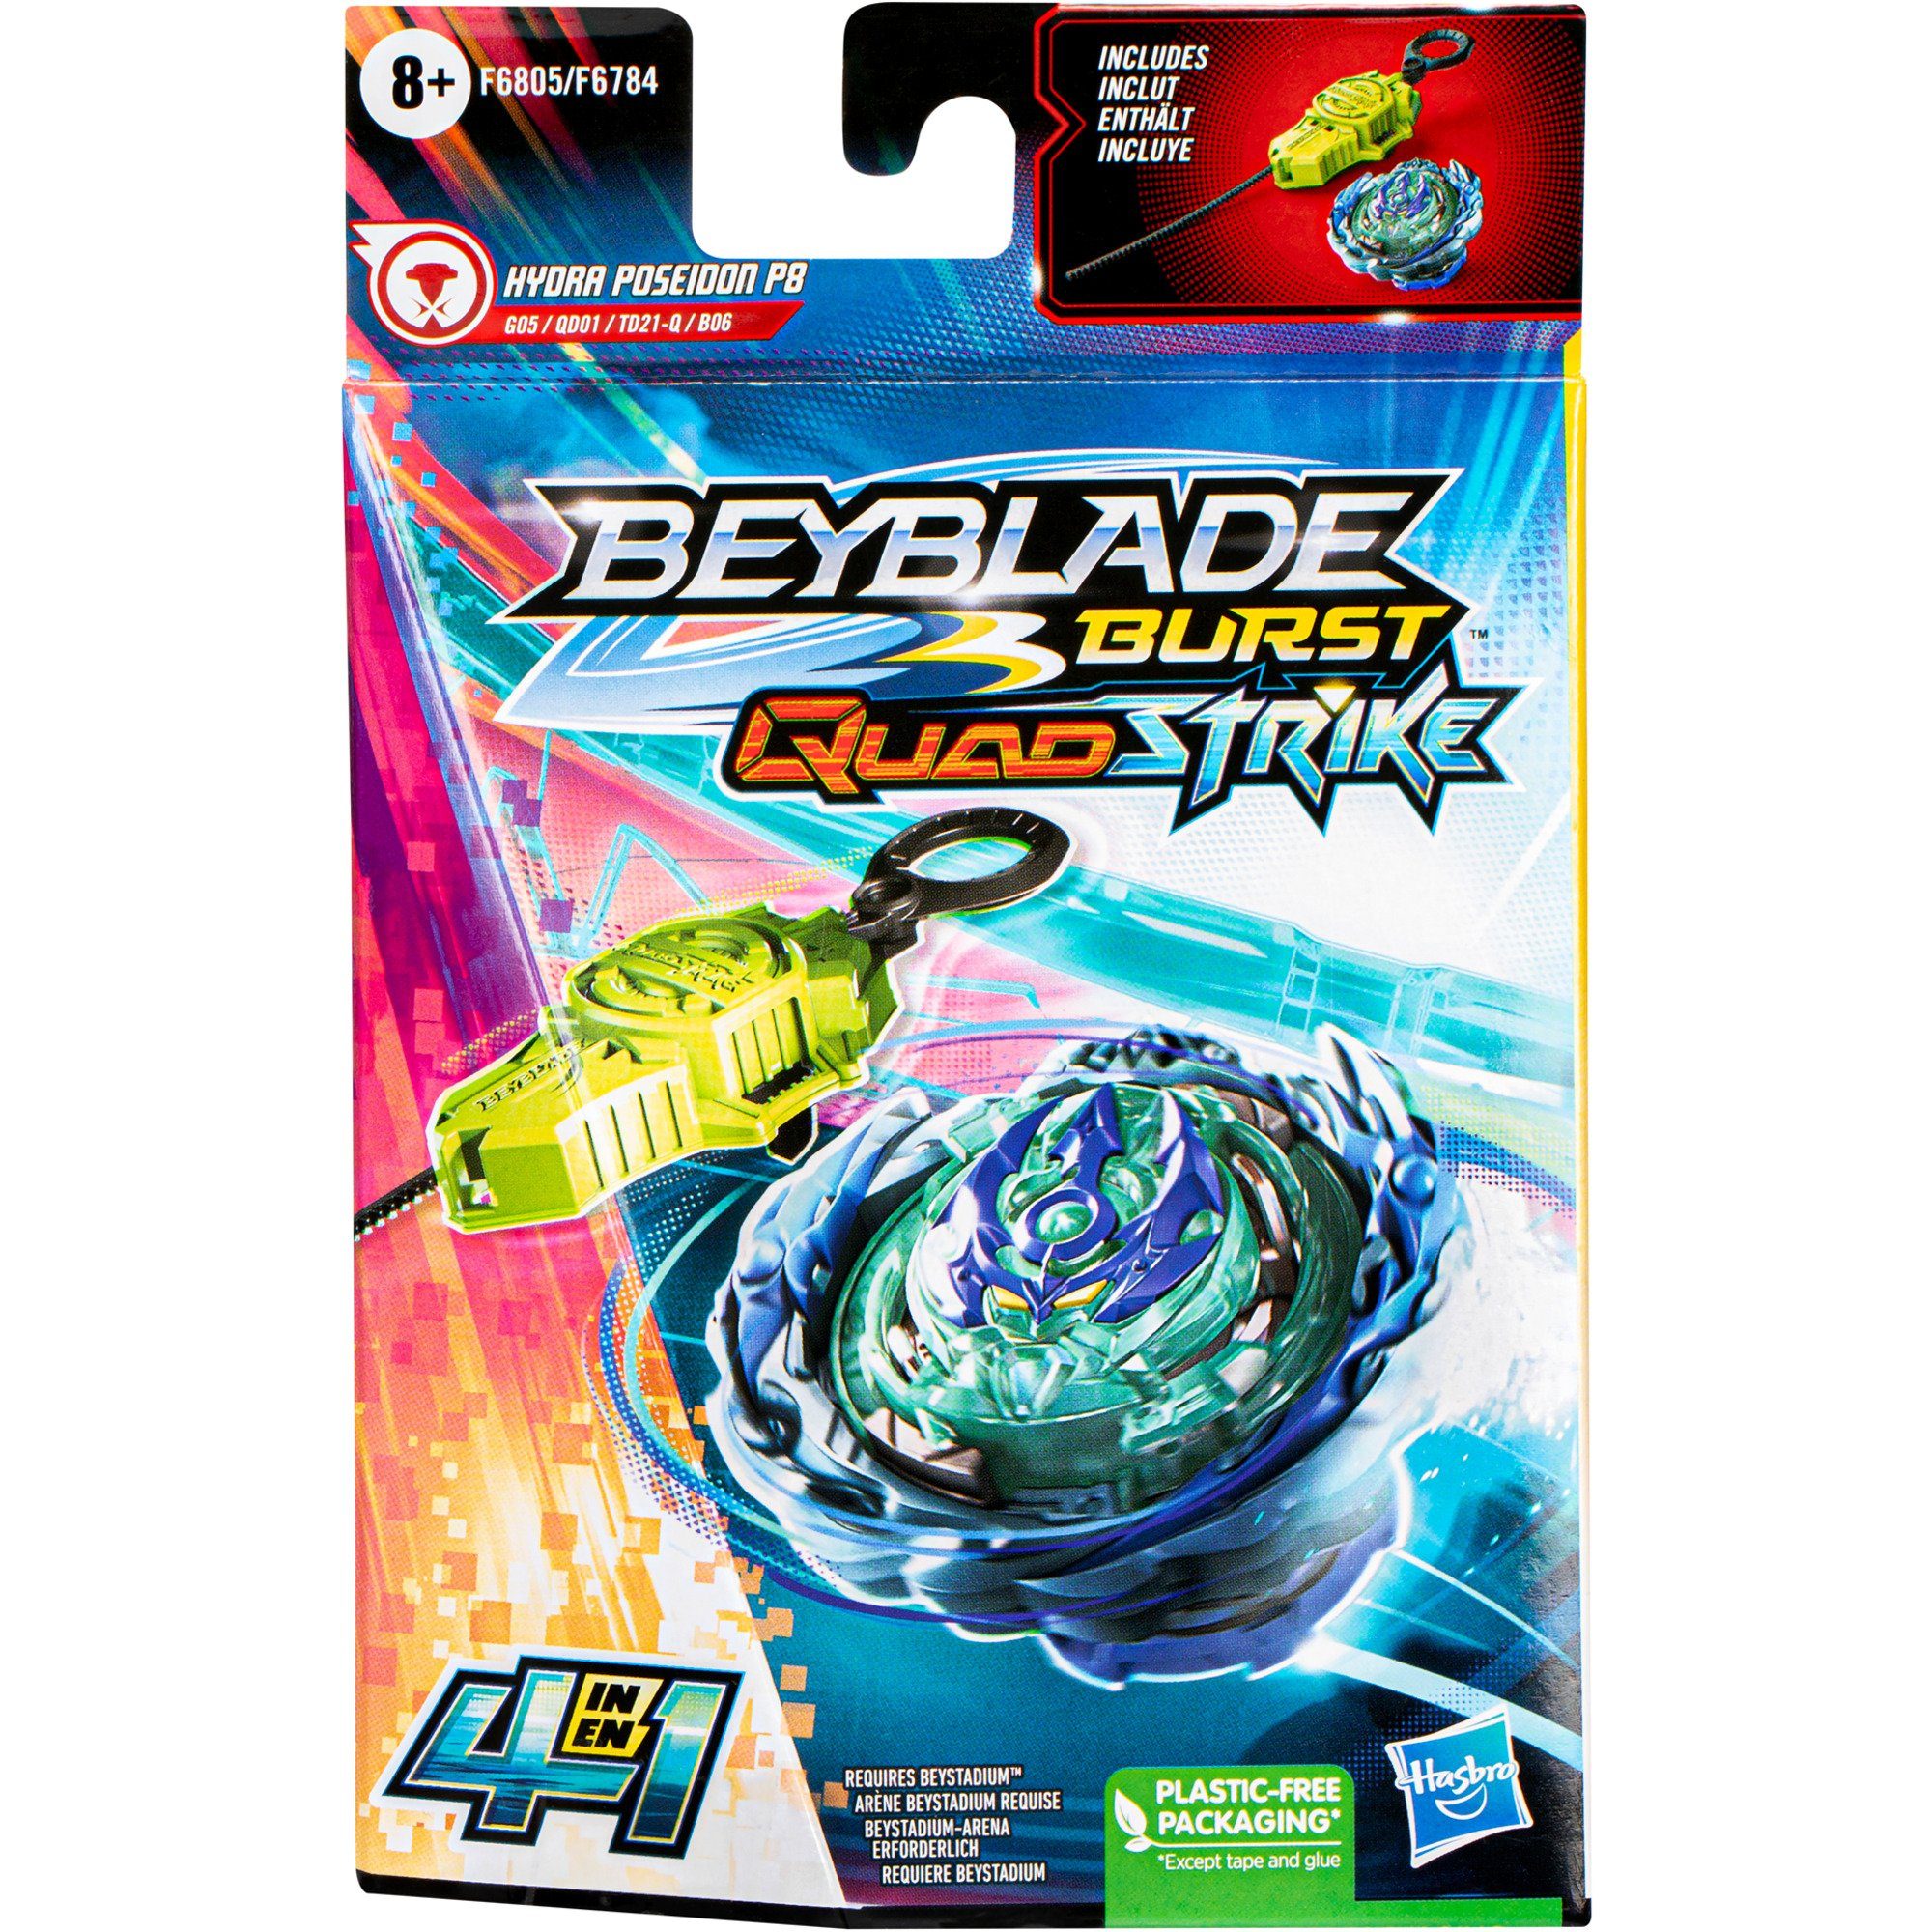 Lernspielzeug P8 Beyblade Hasbro Poseidon Burst Hasbro QuadStrike Hydra